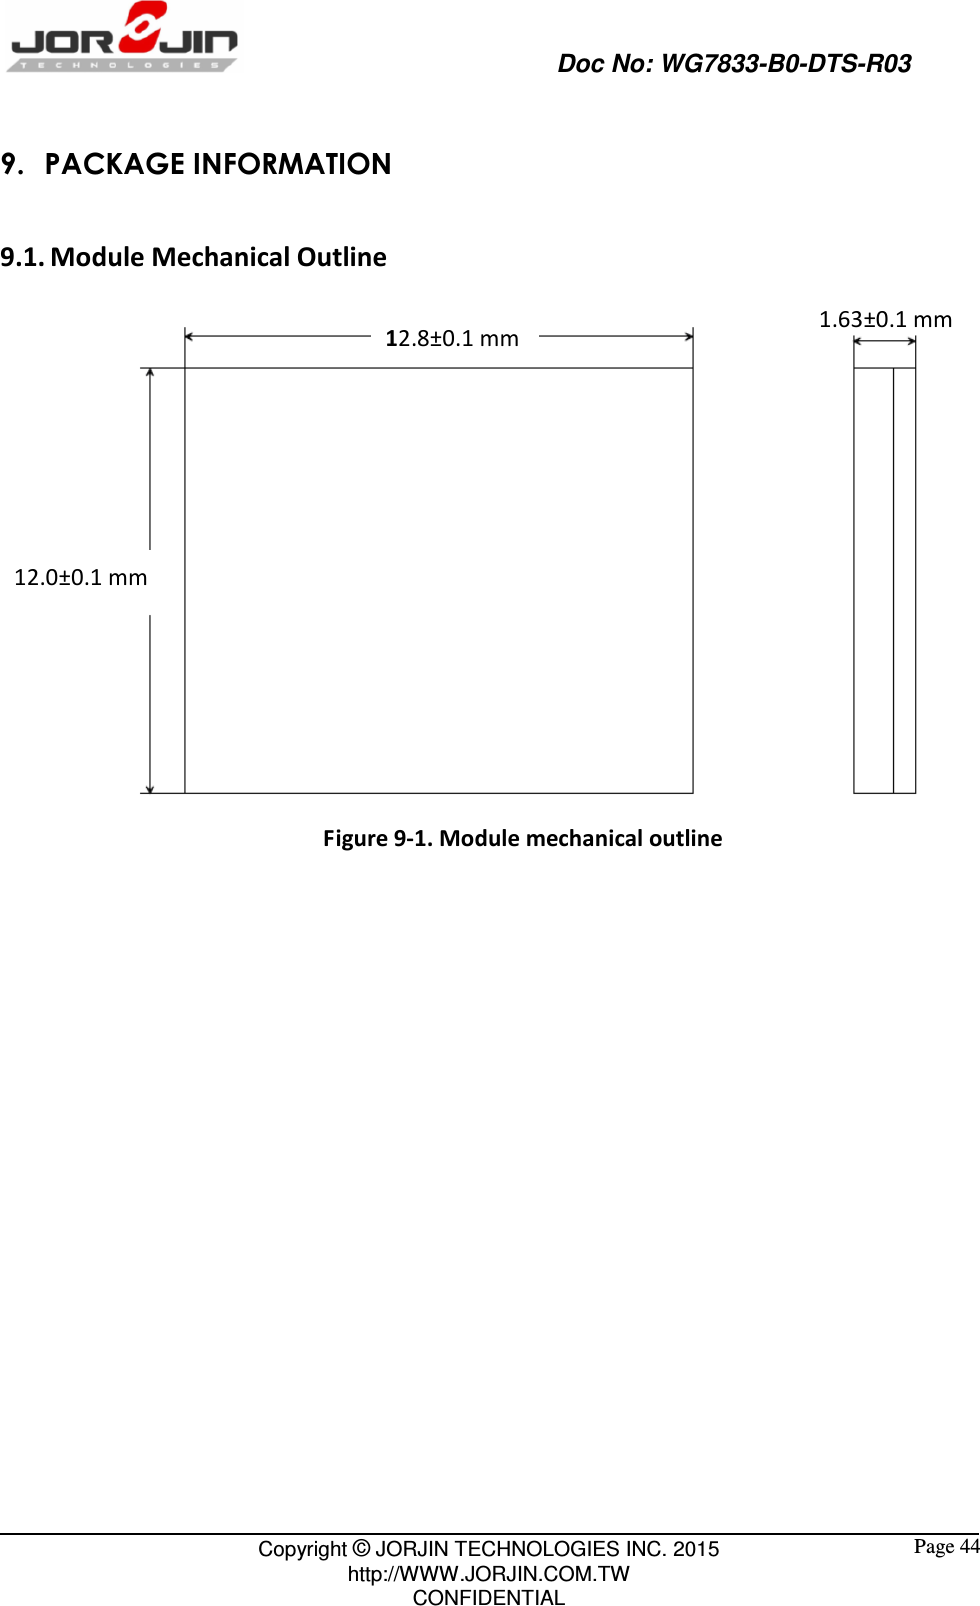                                                   Doc No: WG7833-B0-DTS-R03                                                                                                 Copyright © JORJIN TECHNOLOGIES INC. 2015 http://WWW.JORJIN.COM.TW CONFIDENTIAL  Page 44 9. PACKAGE INFORMATION 9.1. Module Mechanical Outline  Figure 9-1. Module mechanical outline  12.0±0.1 mm 12.8±0.1 mm  1.63±0.1 mm 